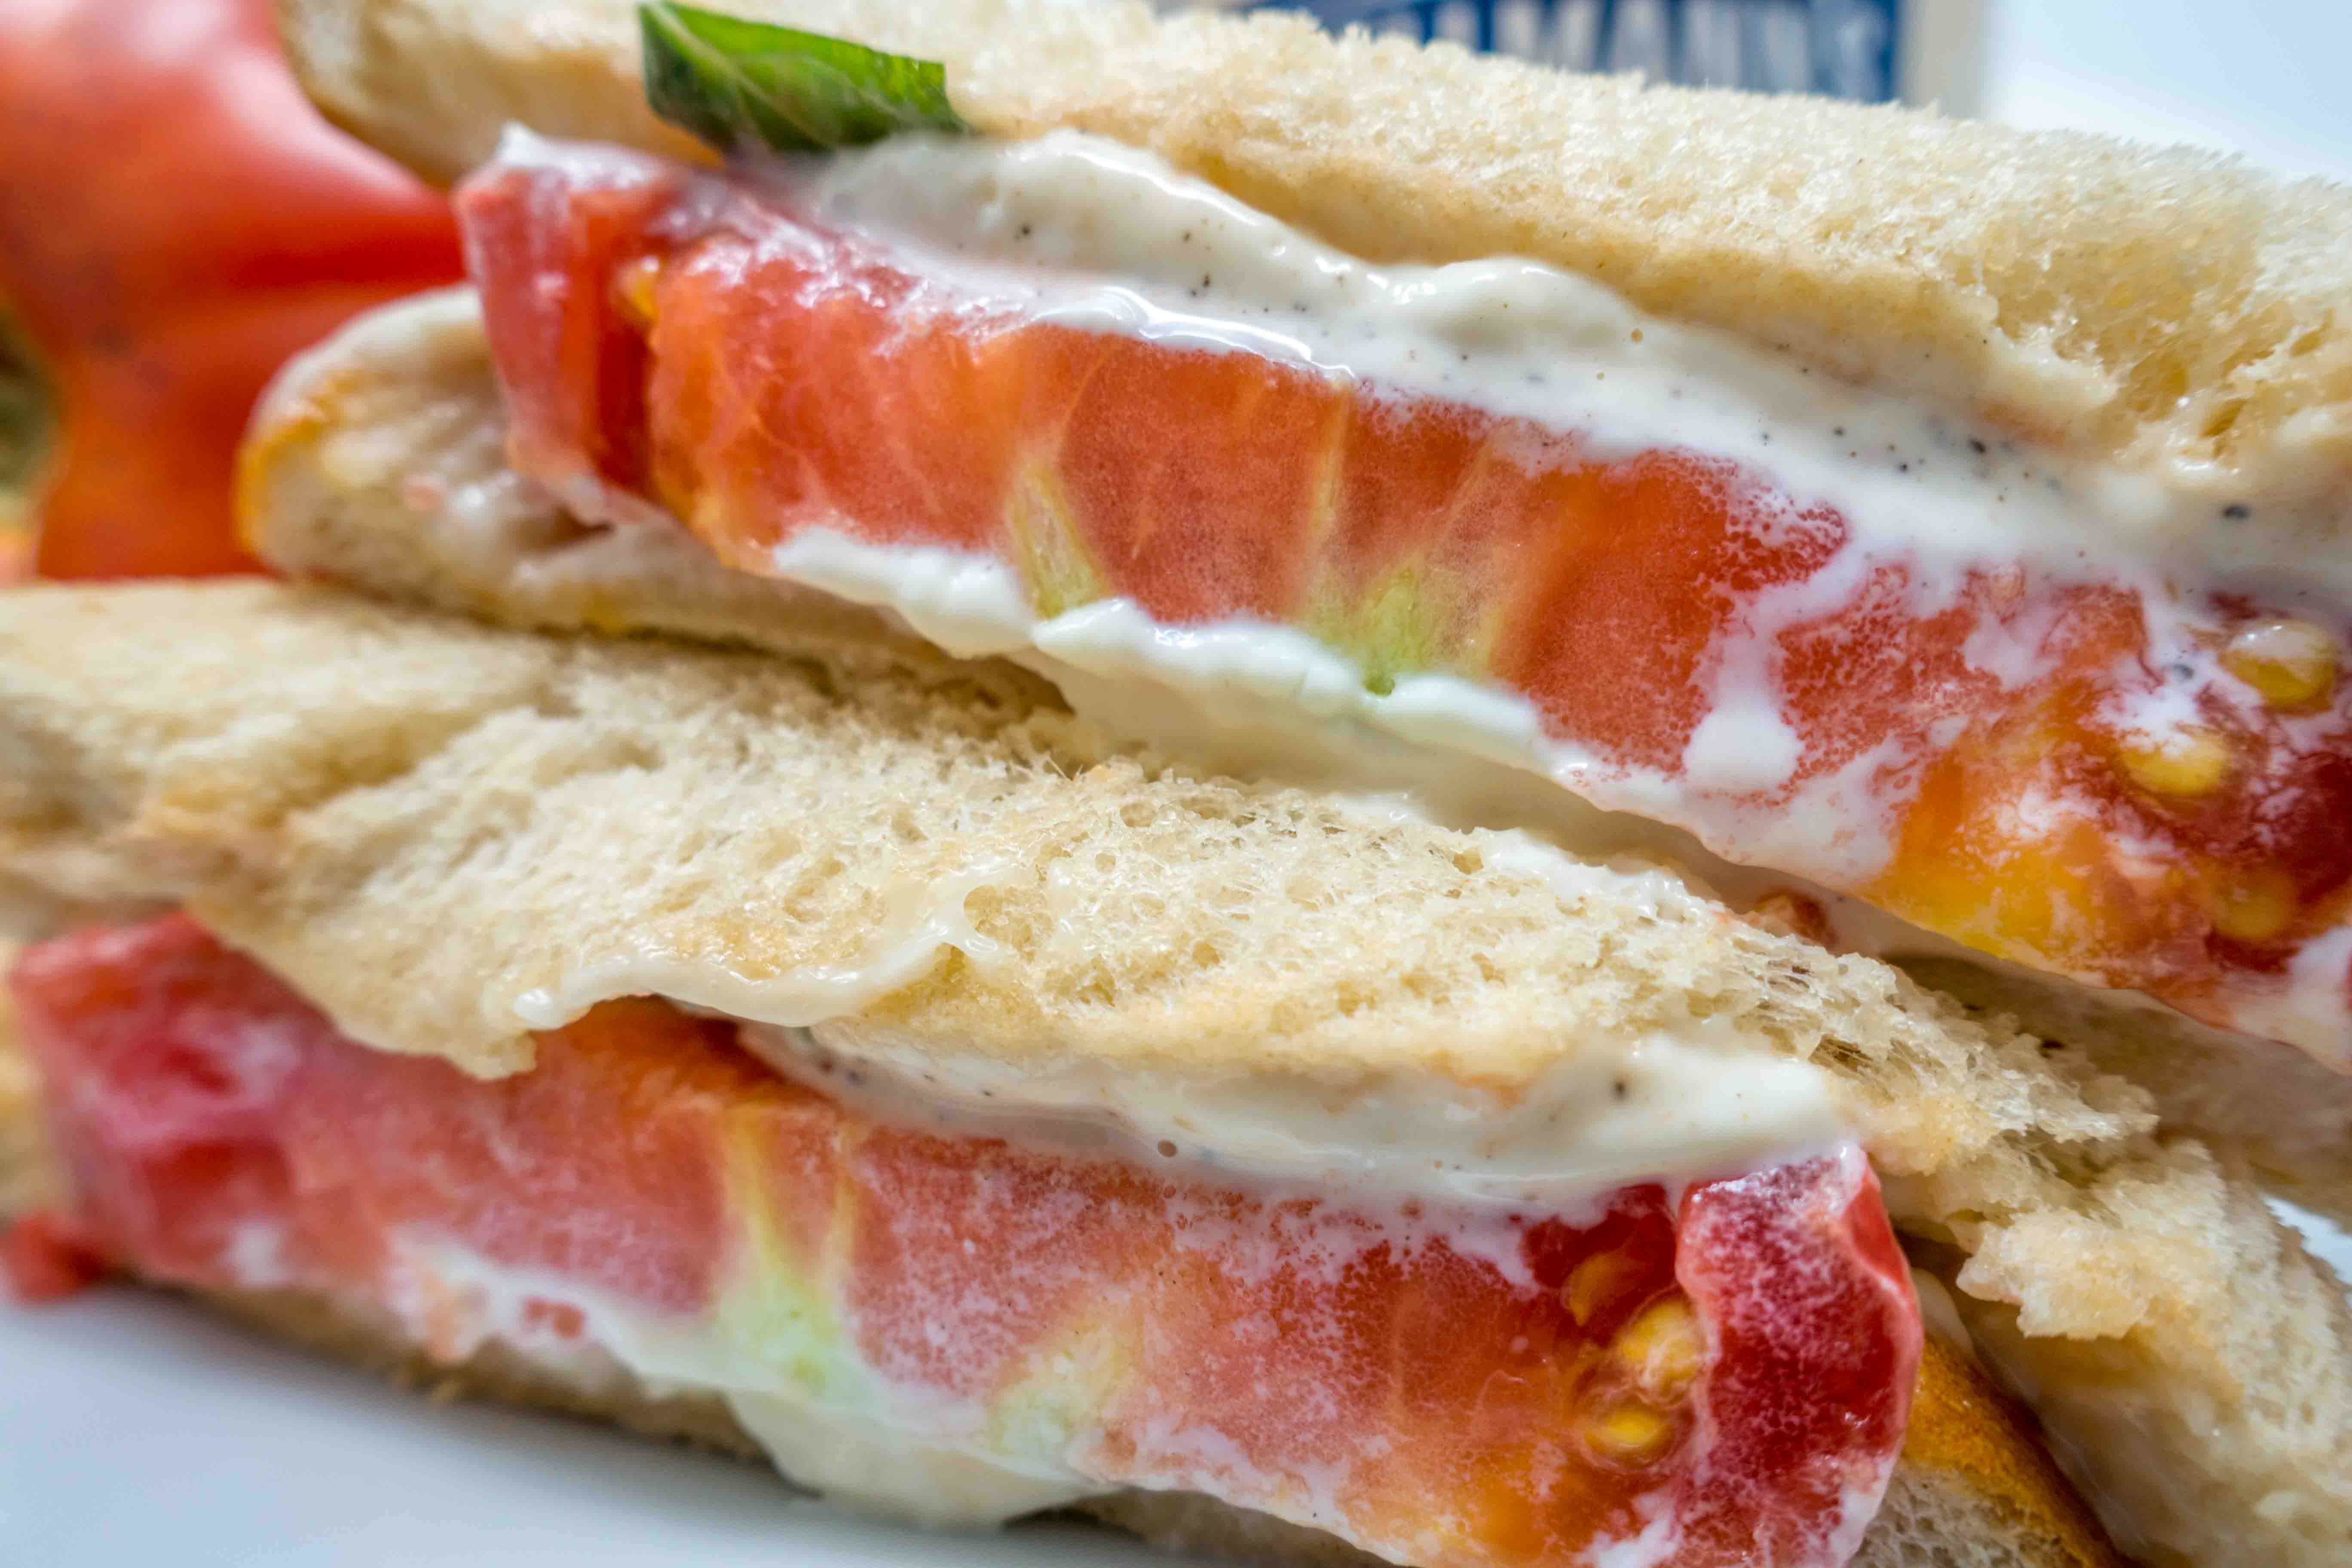 The milky goodness of a southern tomato sandwich